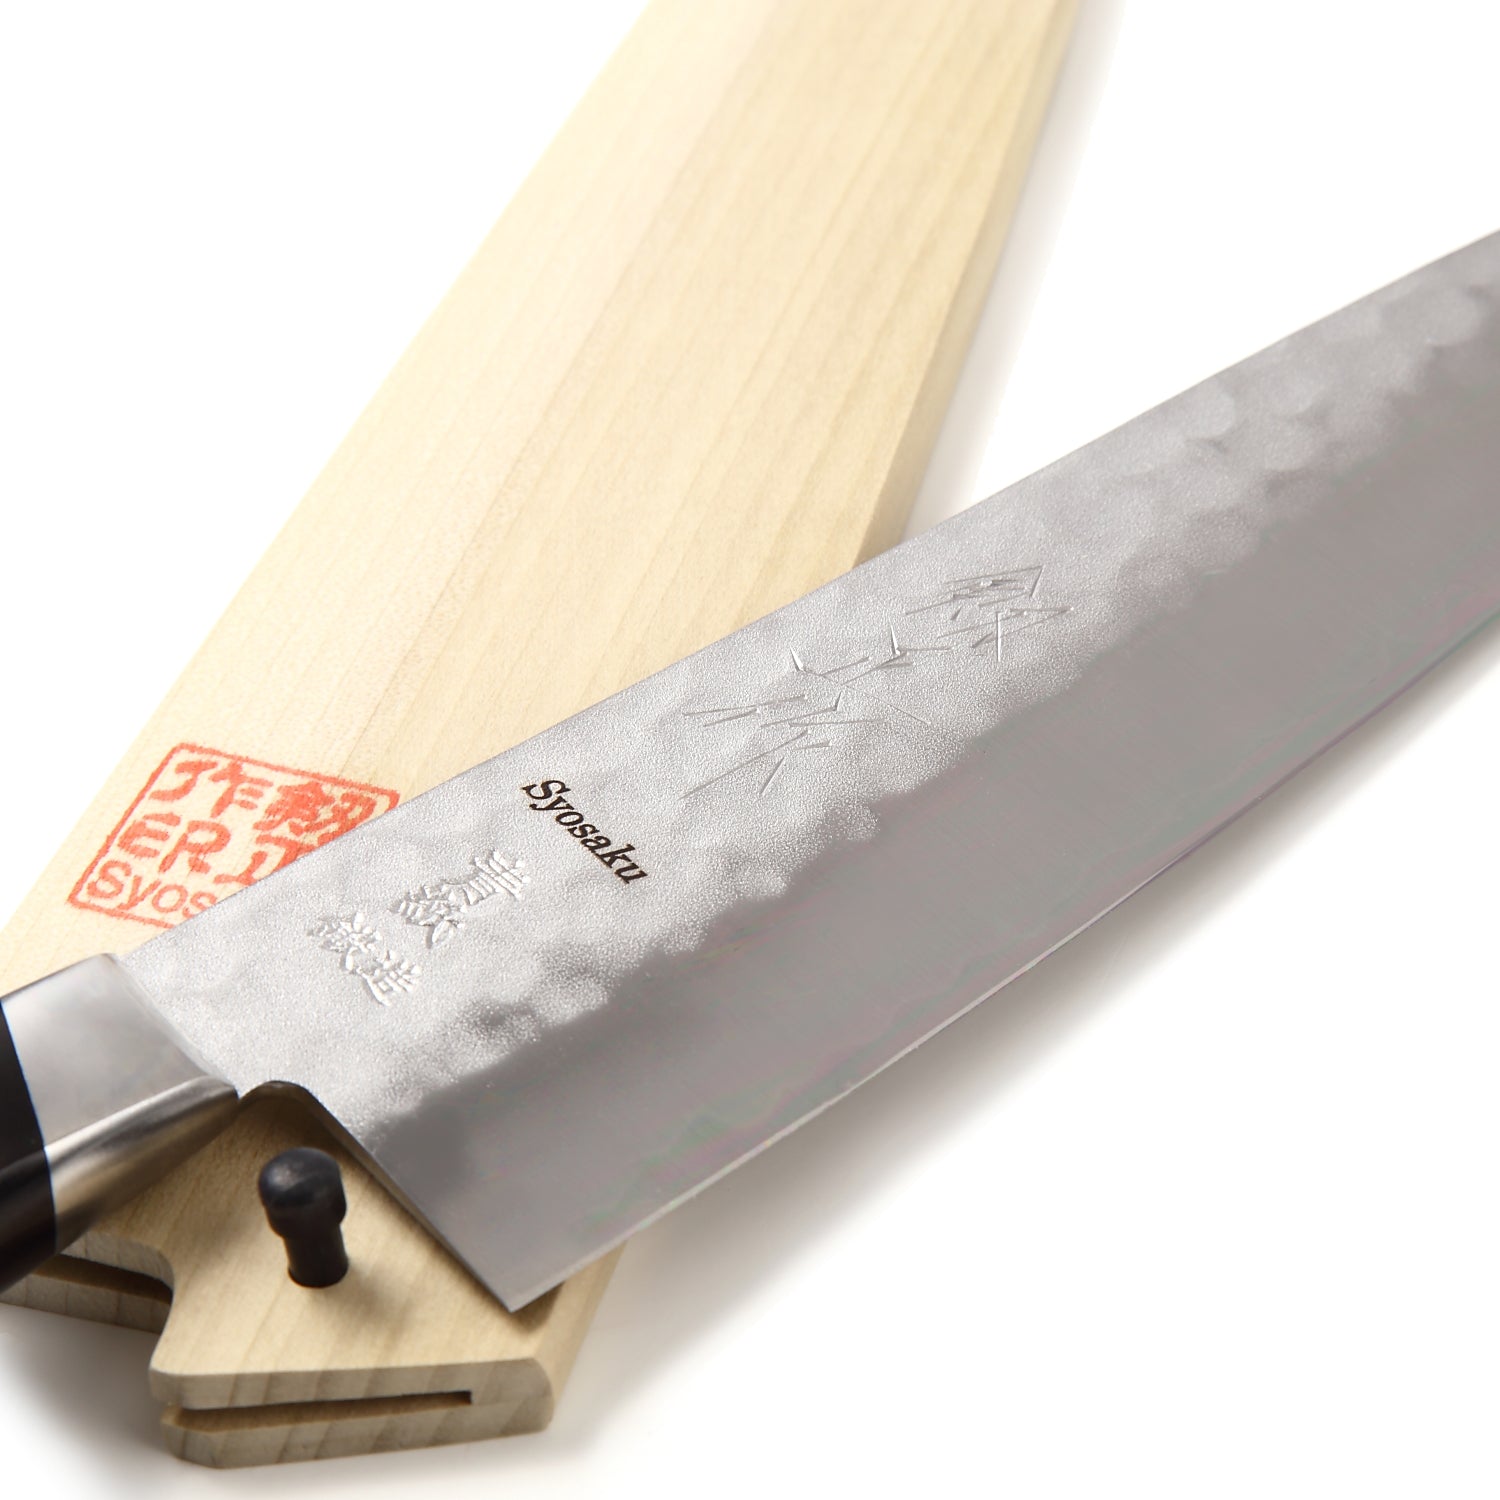 Syosaku Japanese Best Sharp Kitchen Chef Knife Aoko(Blue Steel)-No.2 Black Pakkawood Handle, Gyuto 8-inch (200mm) with Magnolia Wood Sheath Saya Cover - Syosaku-Japan